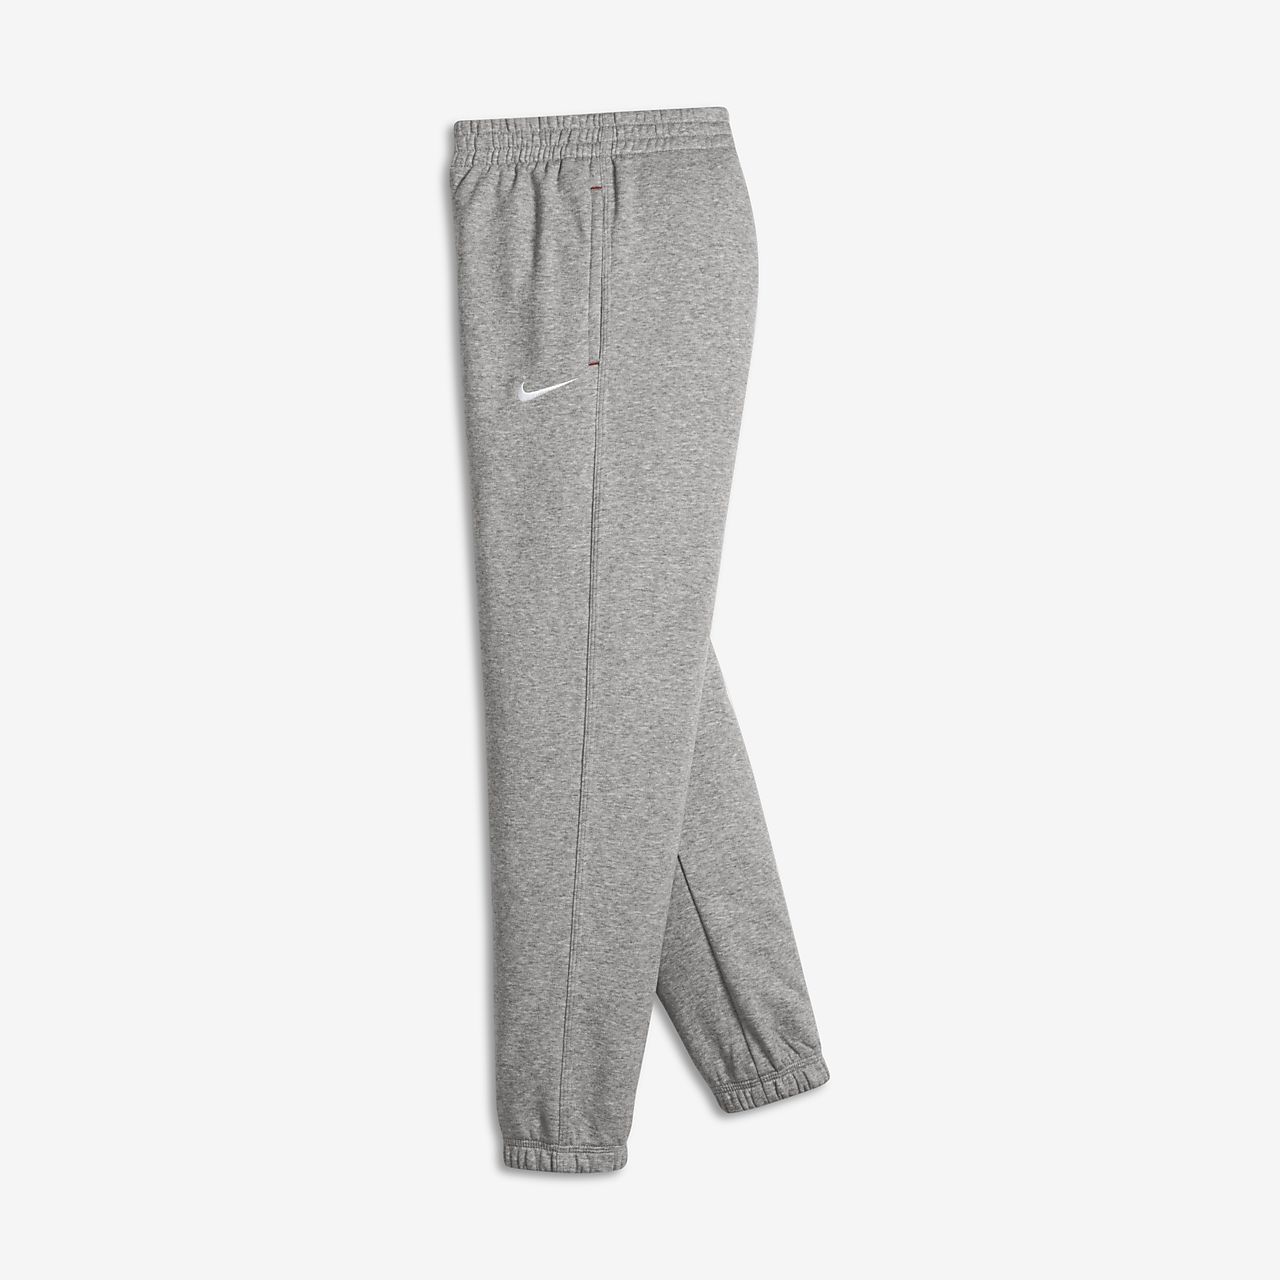 grey cuffed sweatpants